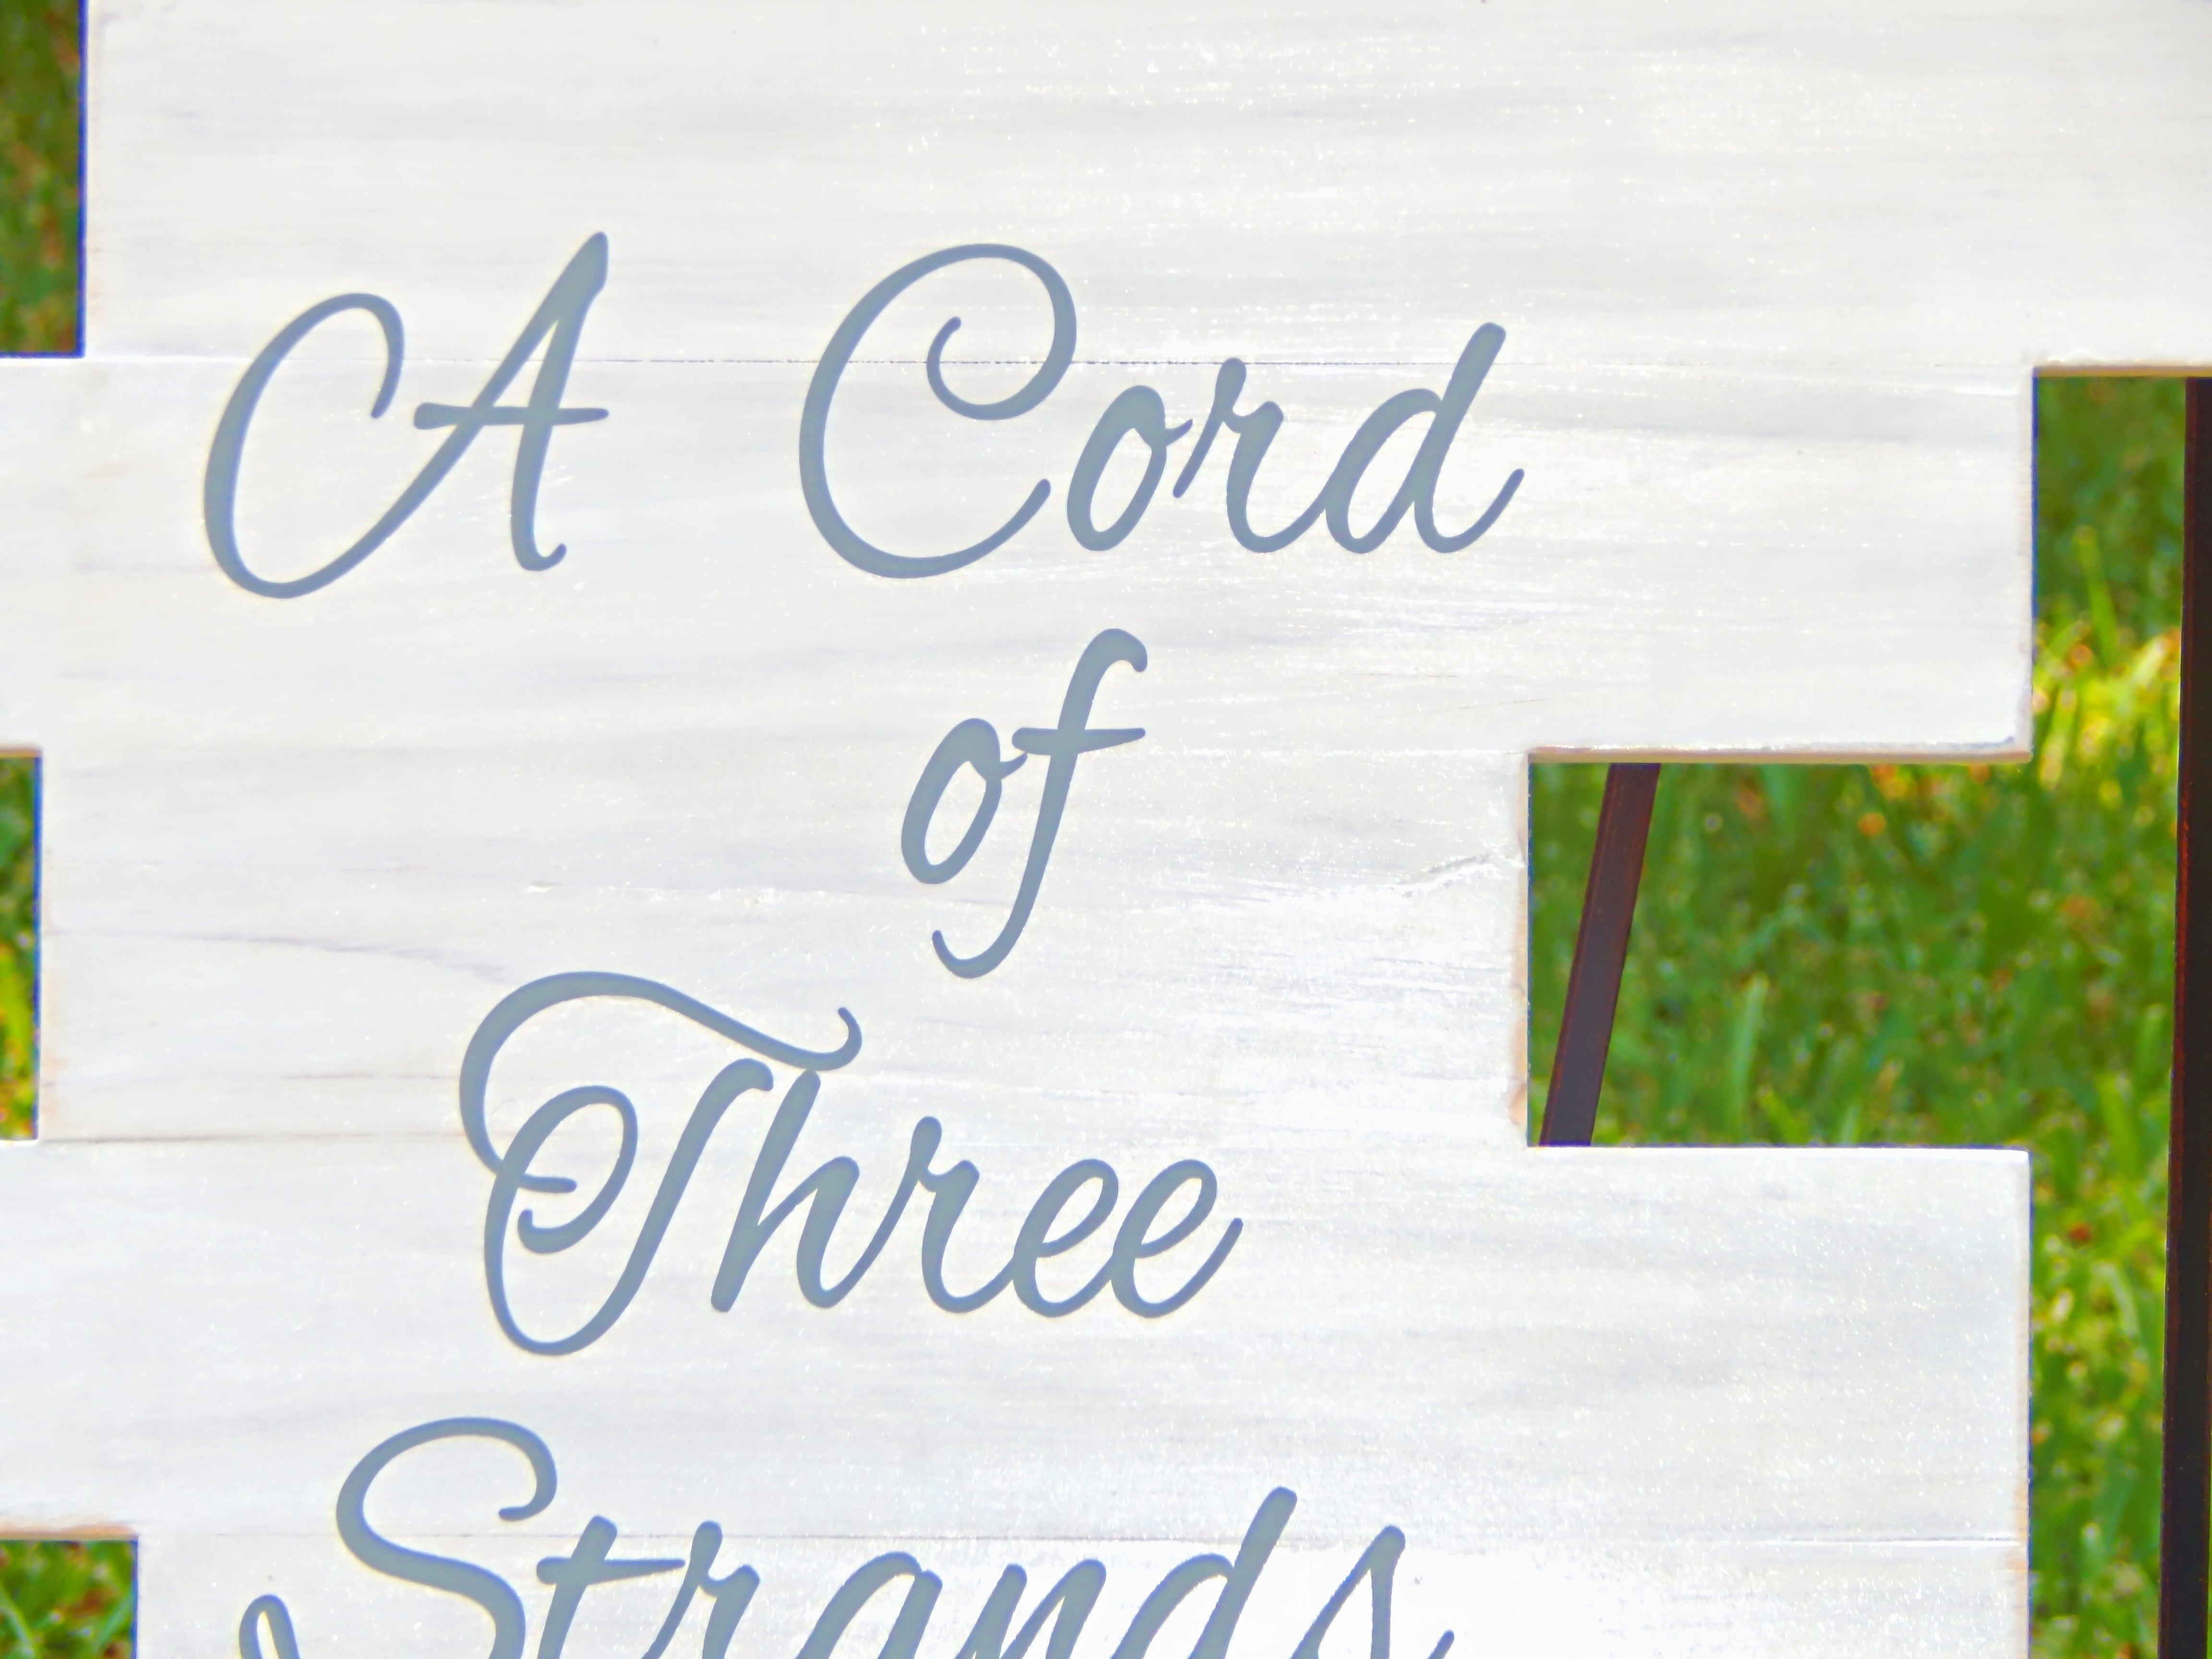 Unity Braids® Wood Cross Wedding Board Cord Of Three Strands - Unity Braids